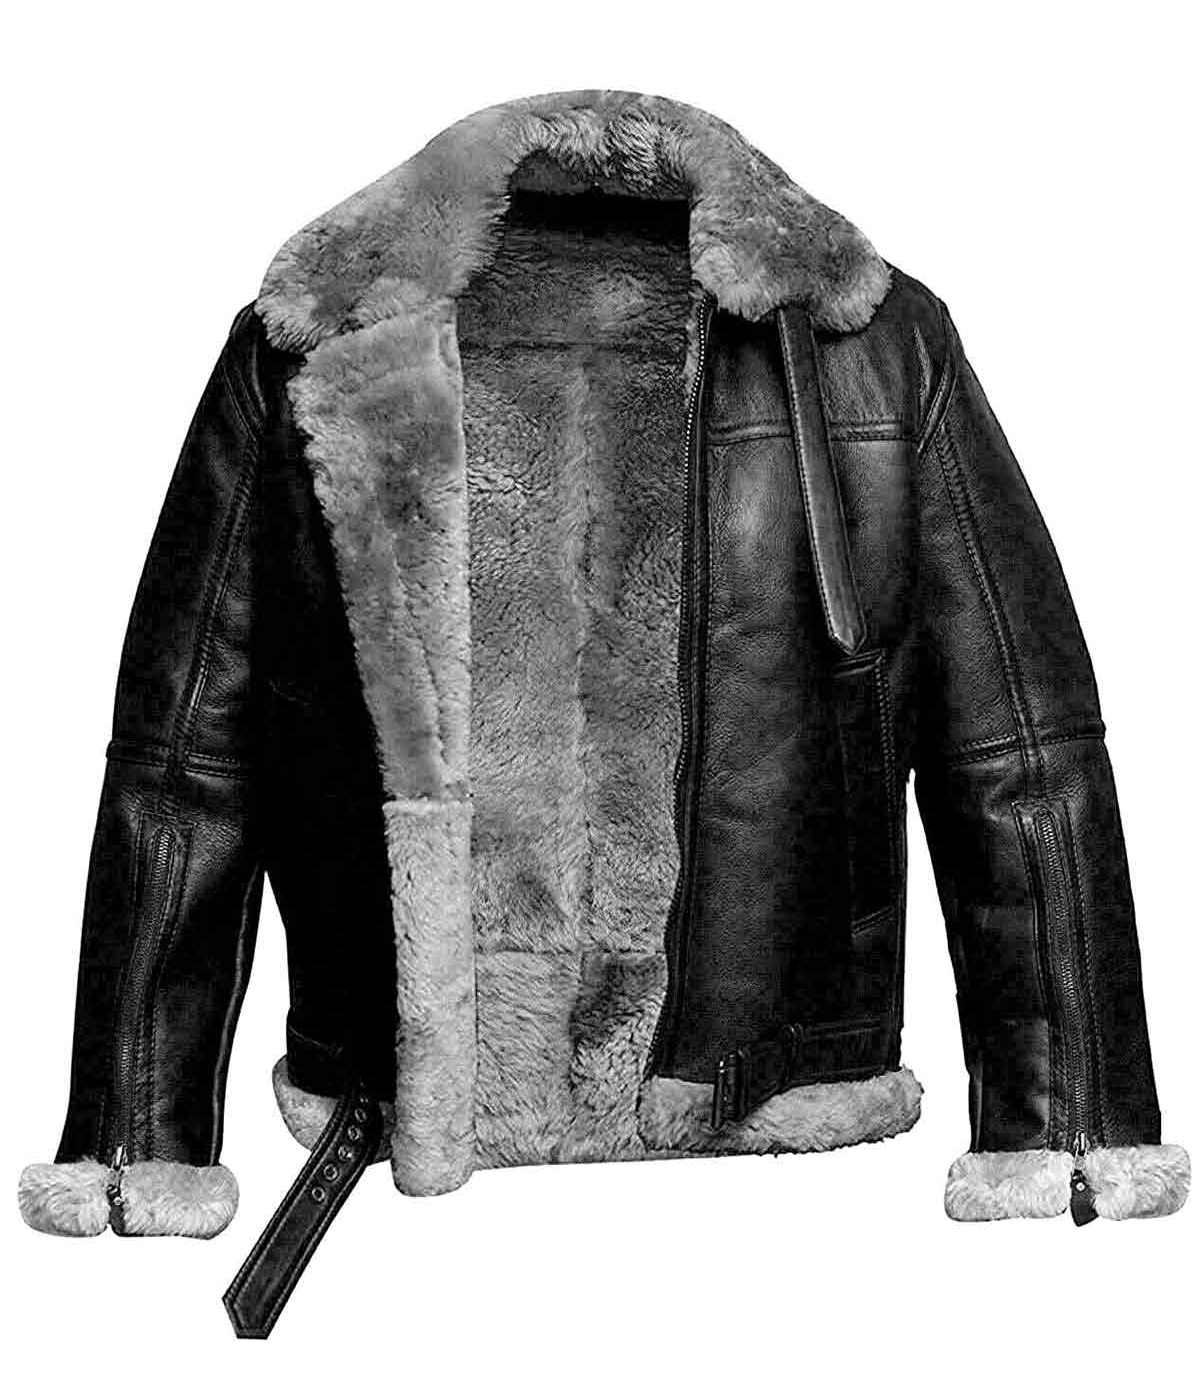 Mens Willie RAF Aviator Real Leather Lambskin Jacket